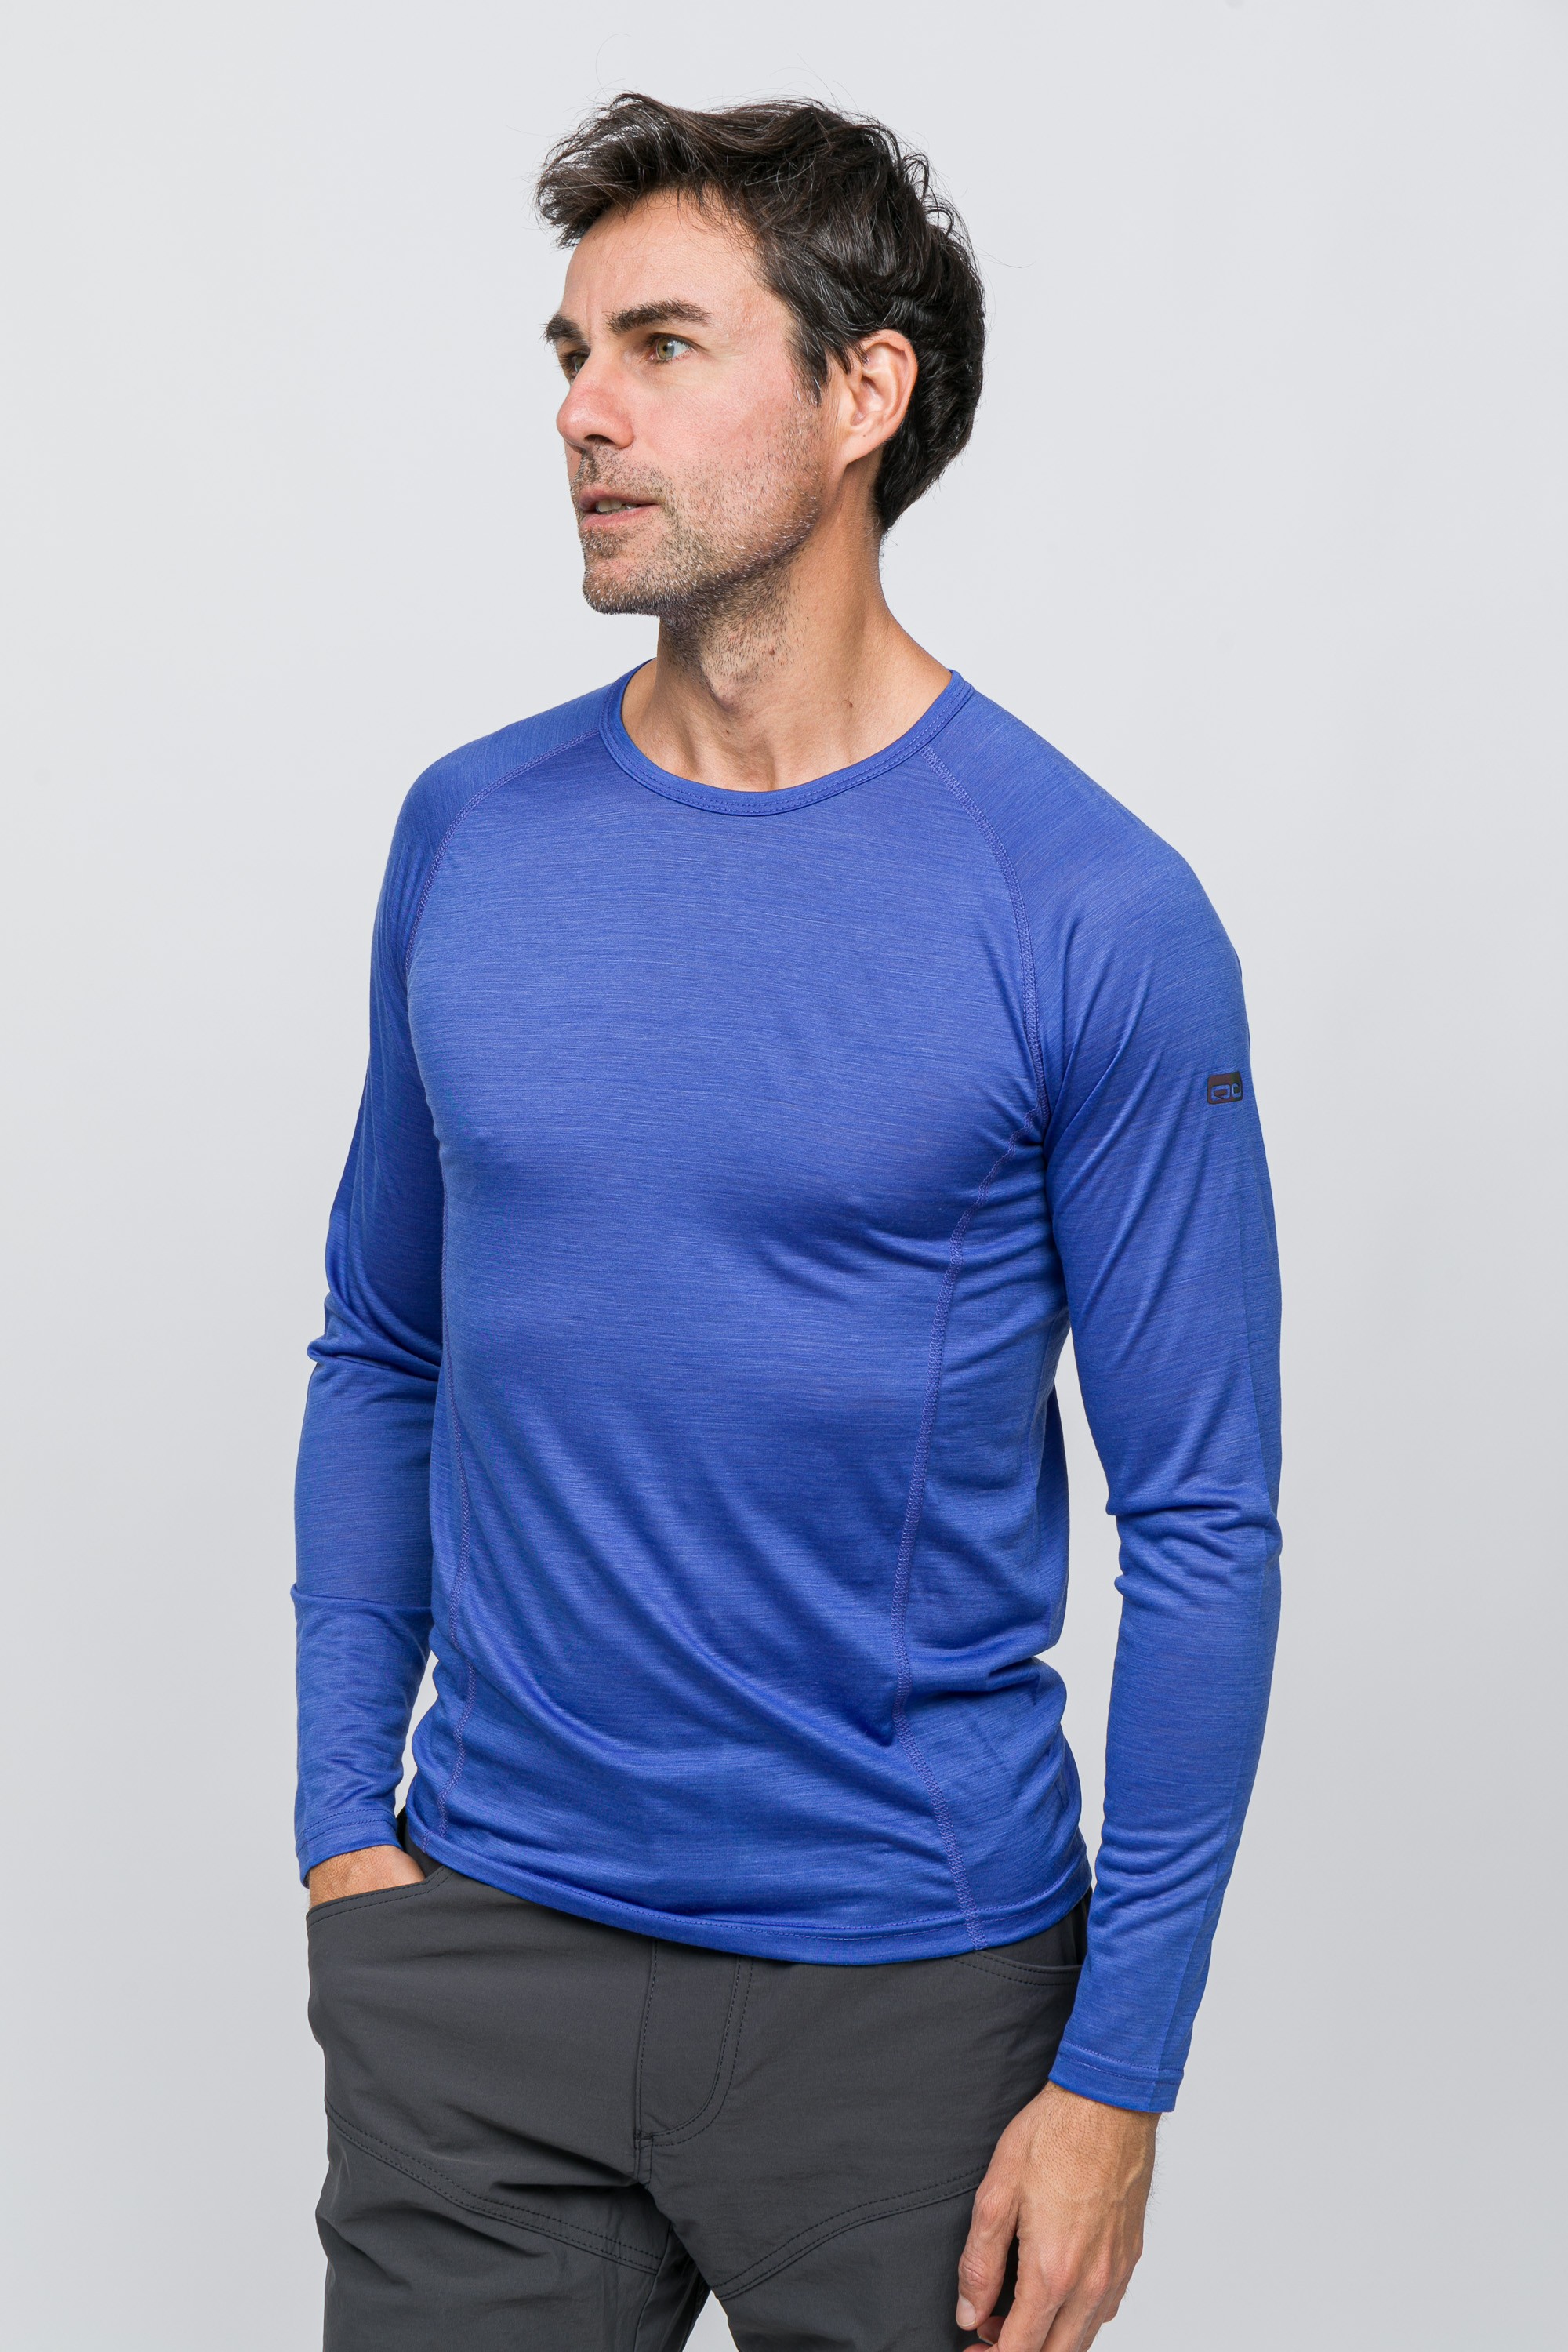 Erkek All-Season Merino Uzun Kollu T-Shirt 135 gr - Mavi